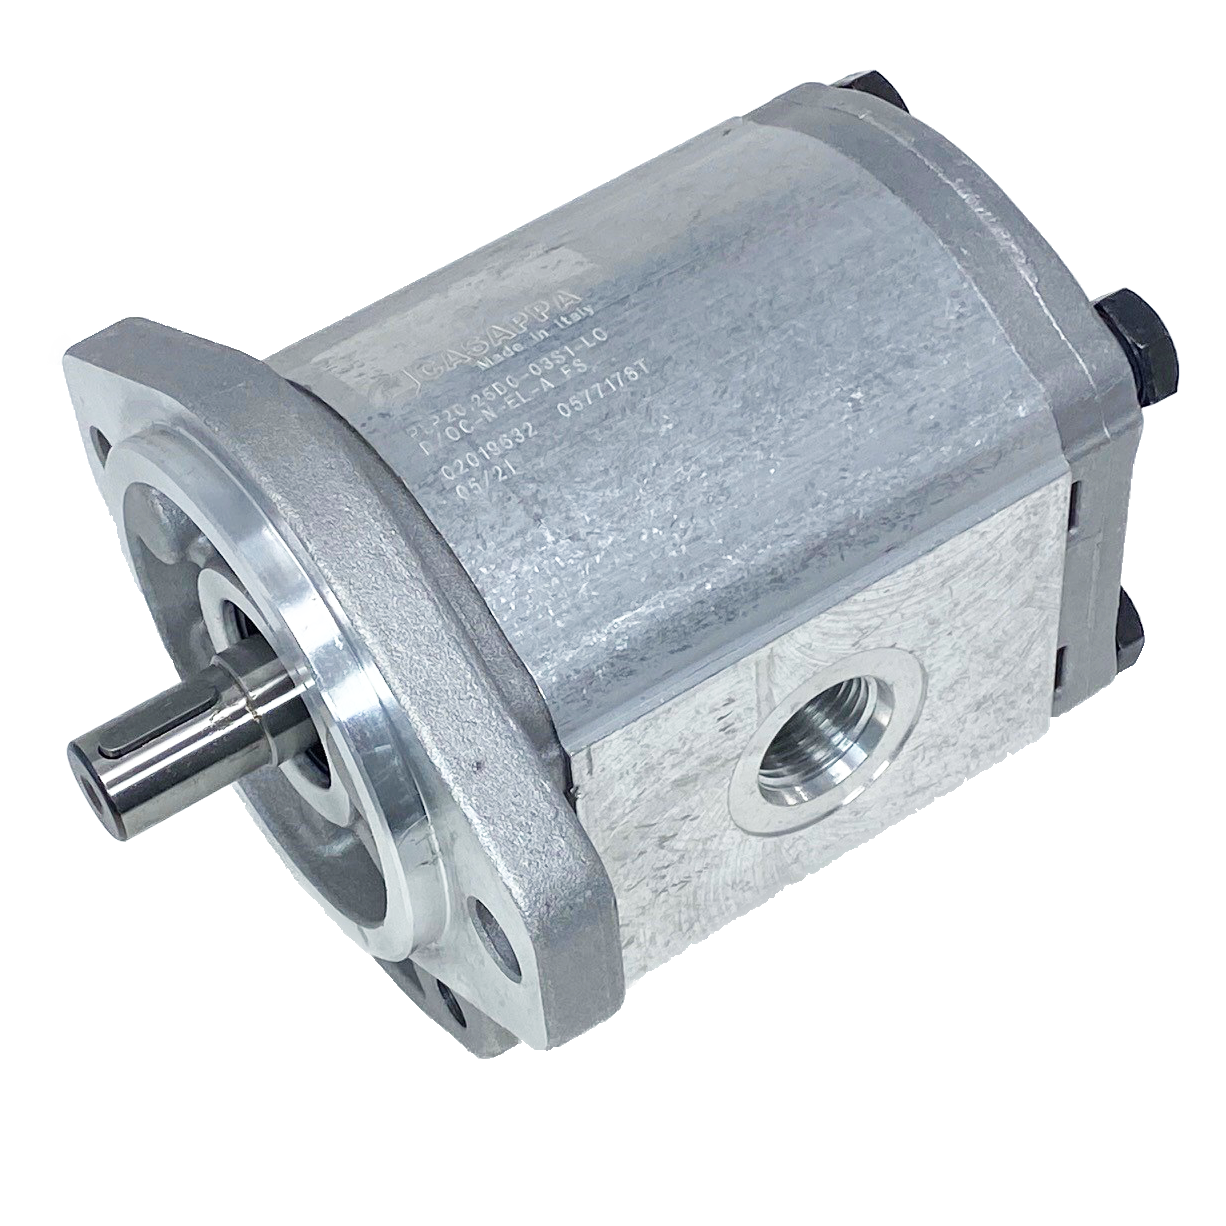 PLM20.25R0-31S1-LOC/OD-N-EL : Casappa Polaris Gear Motor, 26.42cc, 2465psi Rated, 3045RPM, Reversible Rear External Drain, 5/8" Bore x 5/32" Key Shaft, SAE A 2-Bolt Flange, 0.625 (5/8") #10 SAE Inlet, 0.75 (3/4") #12 SAE Outlet, Aluminum Body & Flange